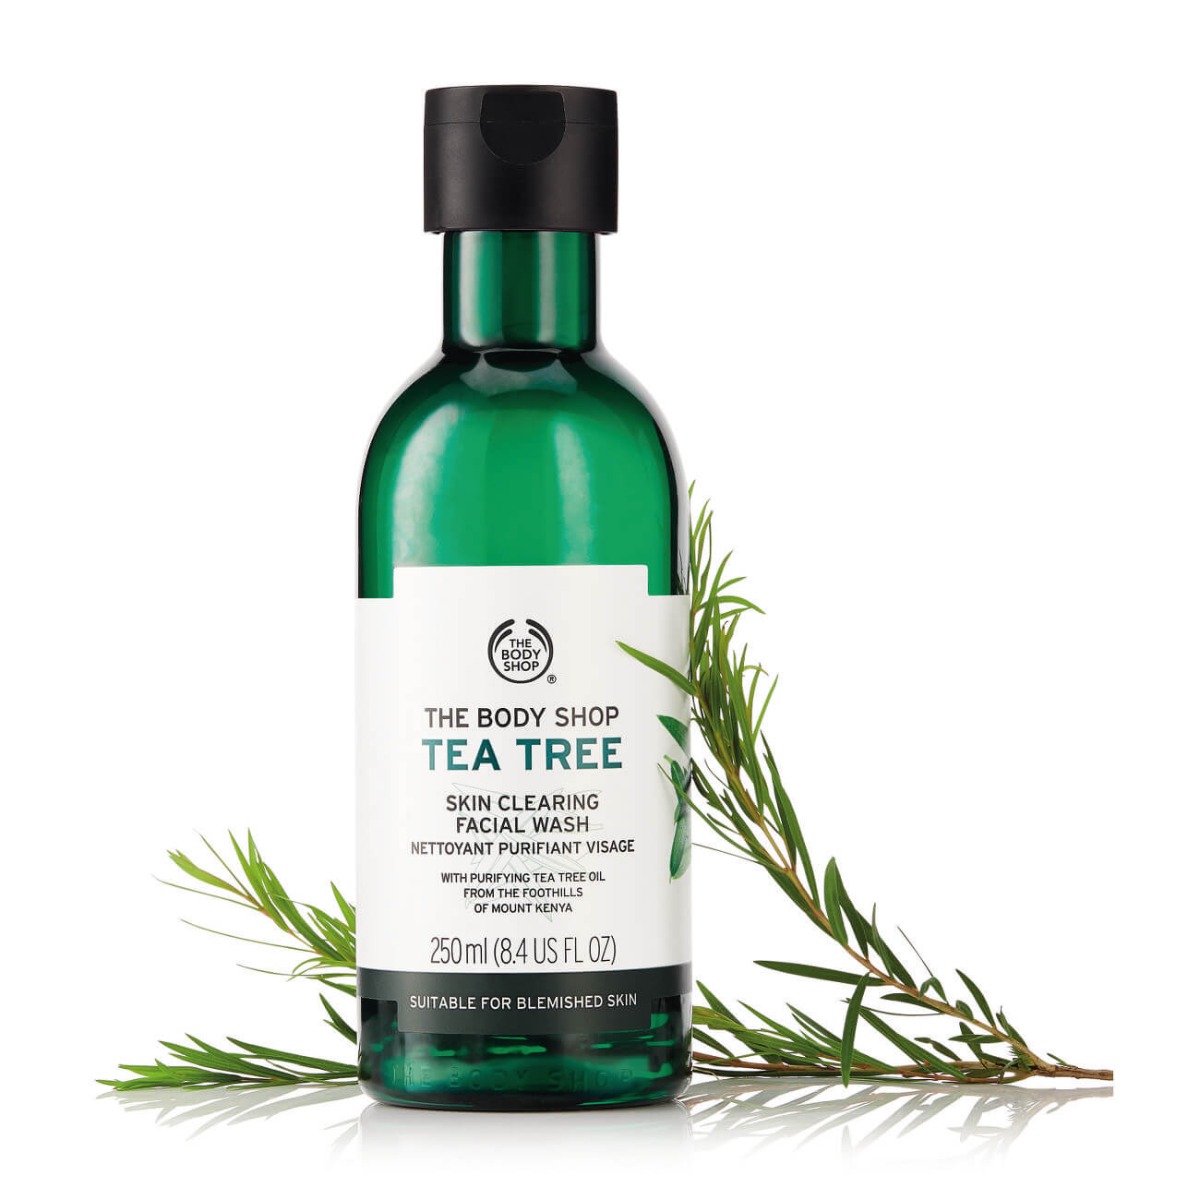 Tea Tree Oil Face Wash Wholesale Deals Save Jlcatj Gob Mx